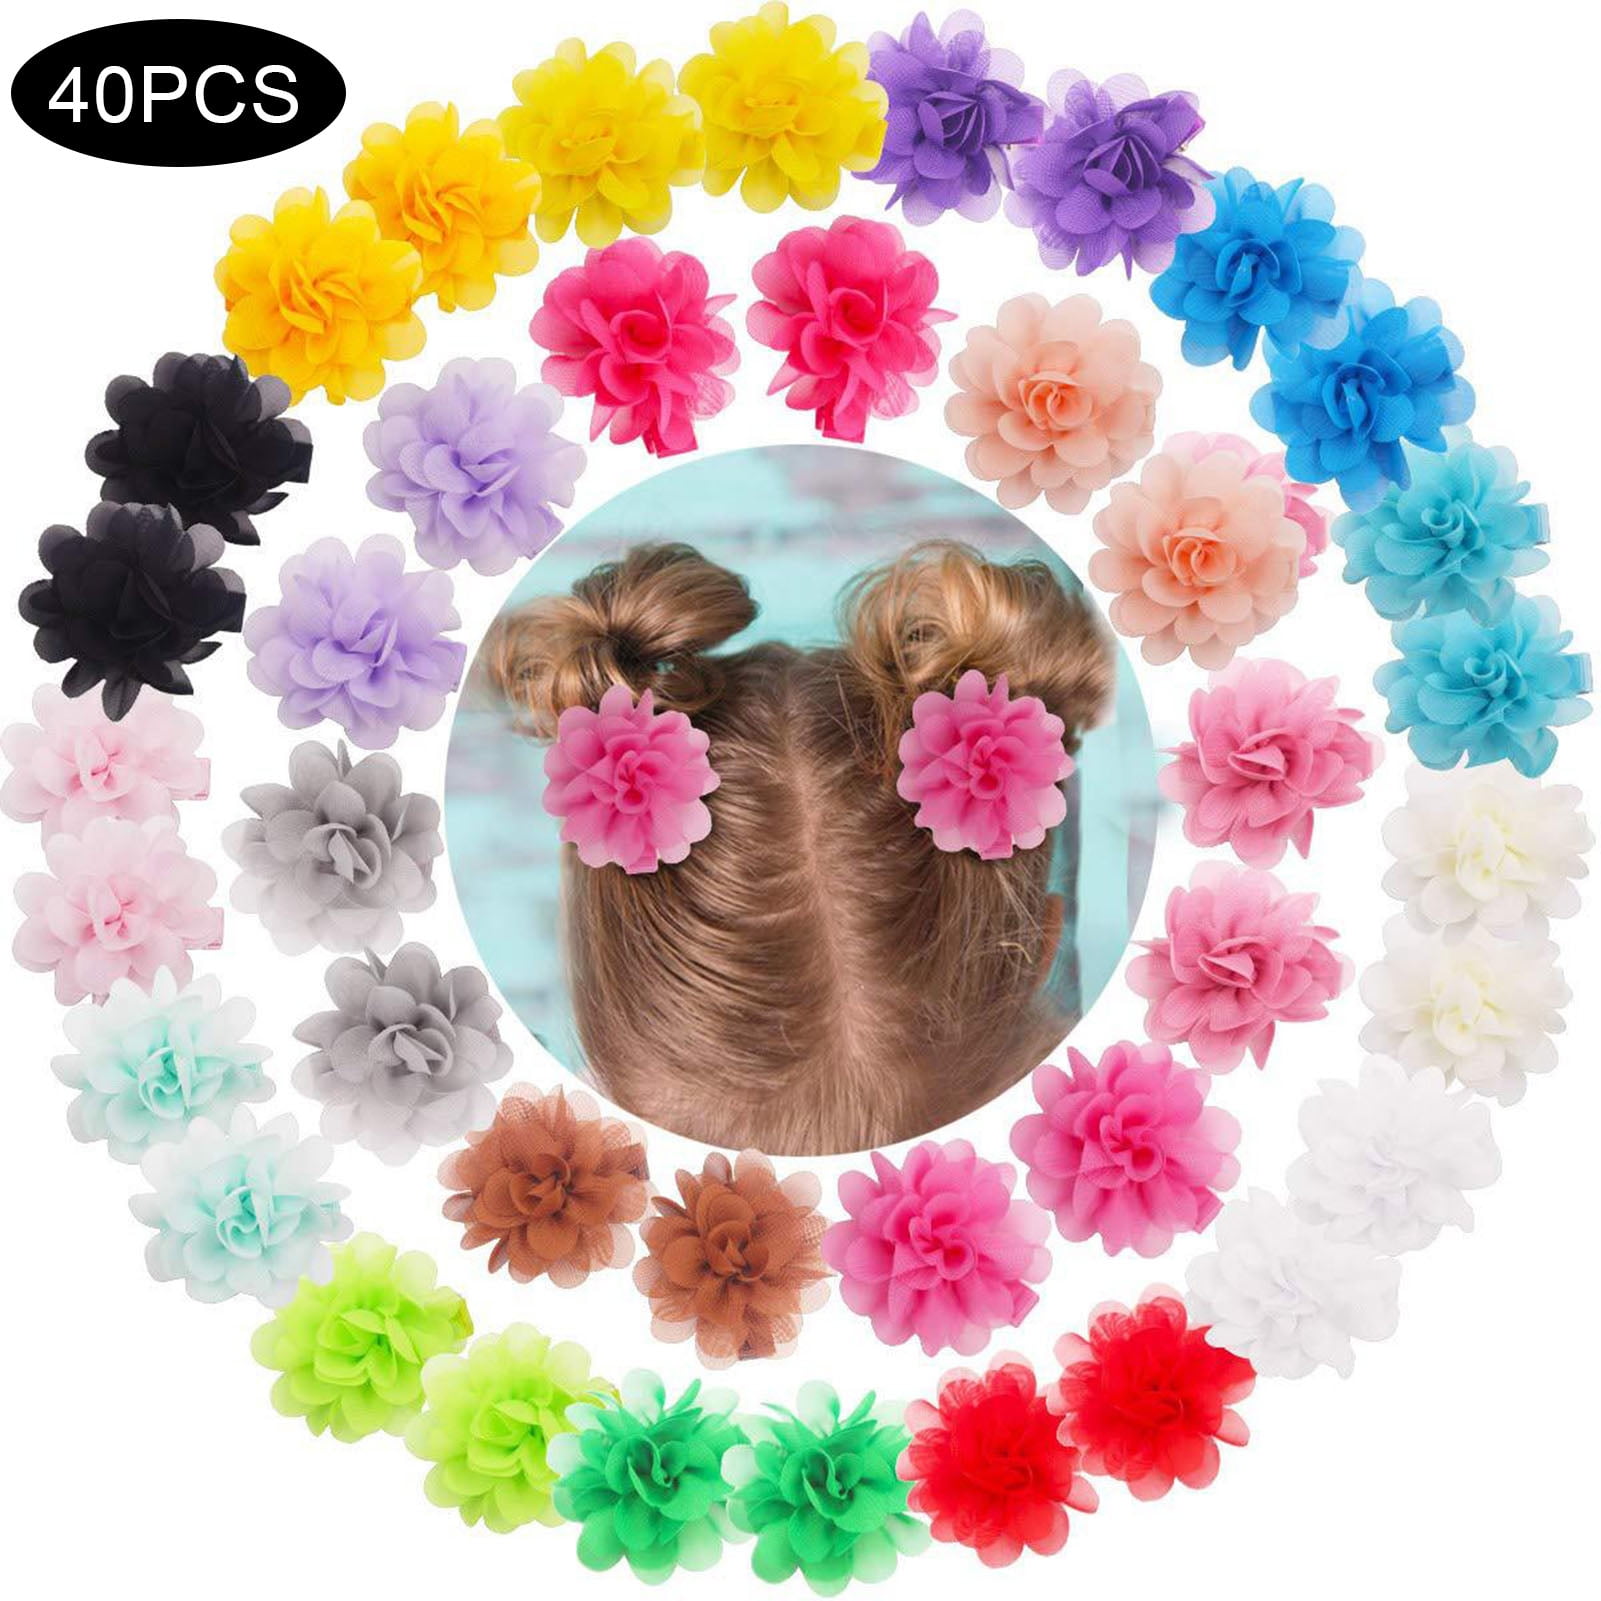 10 Pcs Colorful Solid Grosgrain Ribbon Bows Clips Hairpin Girl's Hair Bows